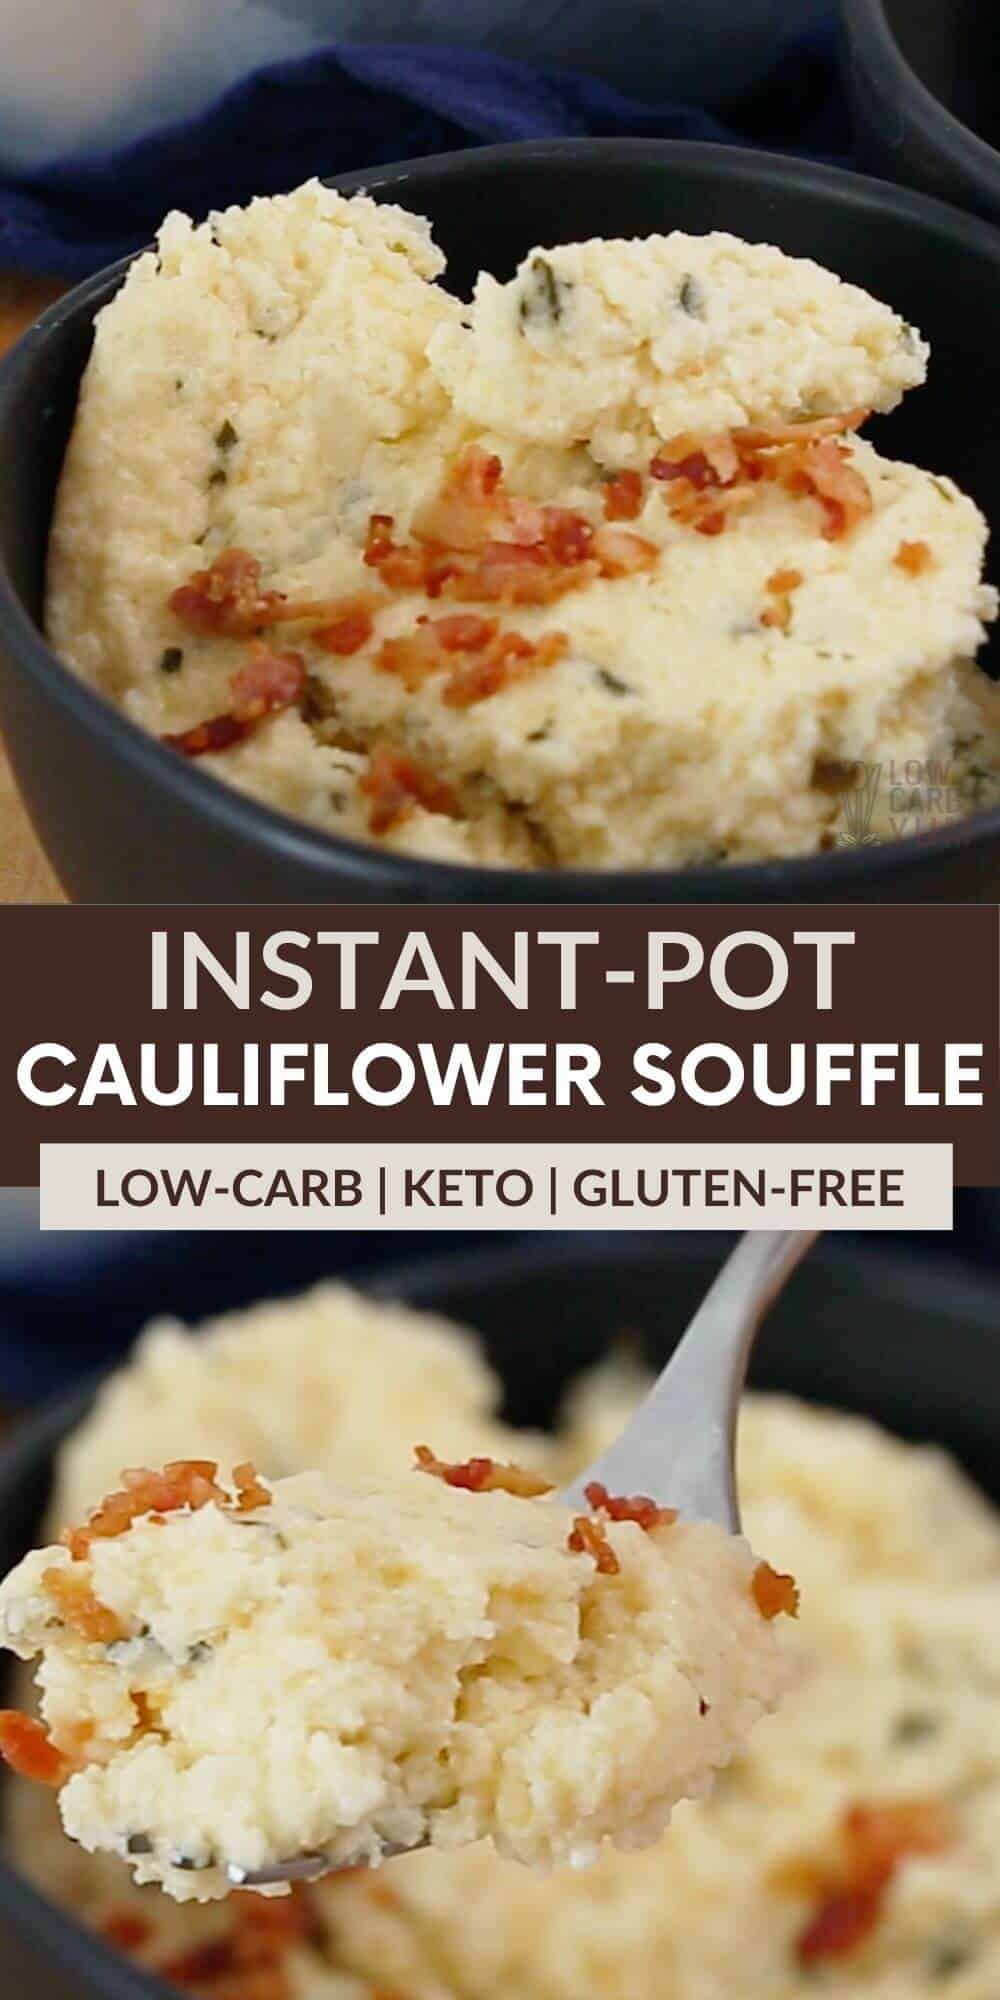 cauliflower souffle pinterest image.